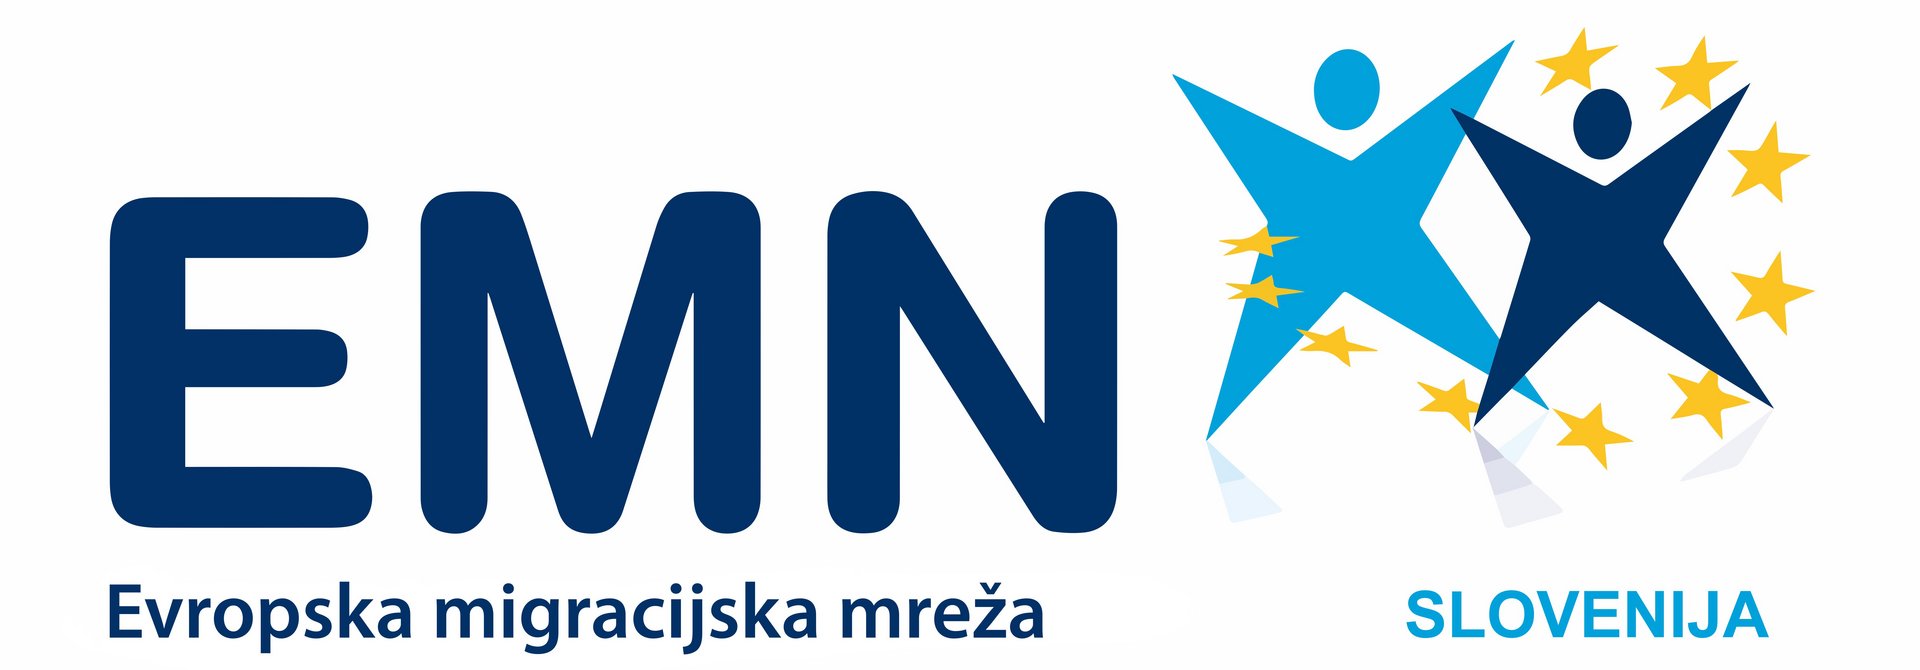 Logotip Evropske migracijske mreže